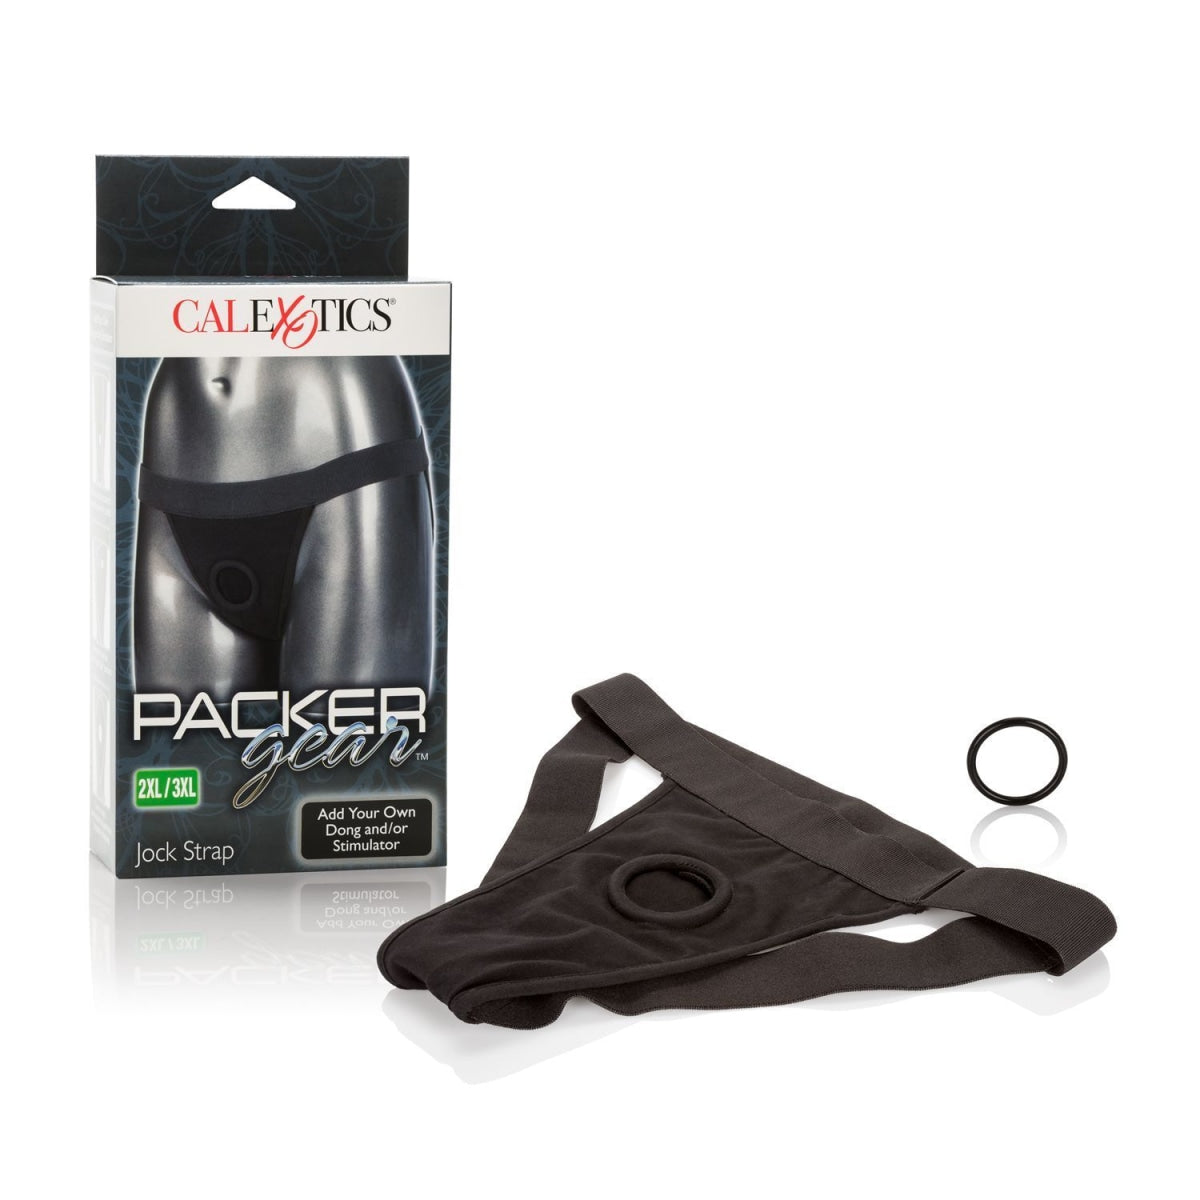 Packer Gear Jock Strap 2xl-3xl Intimates Adult Boutique